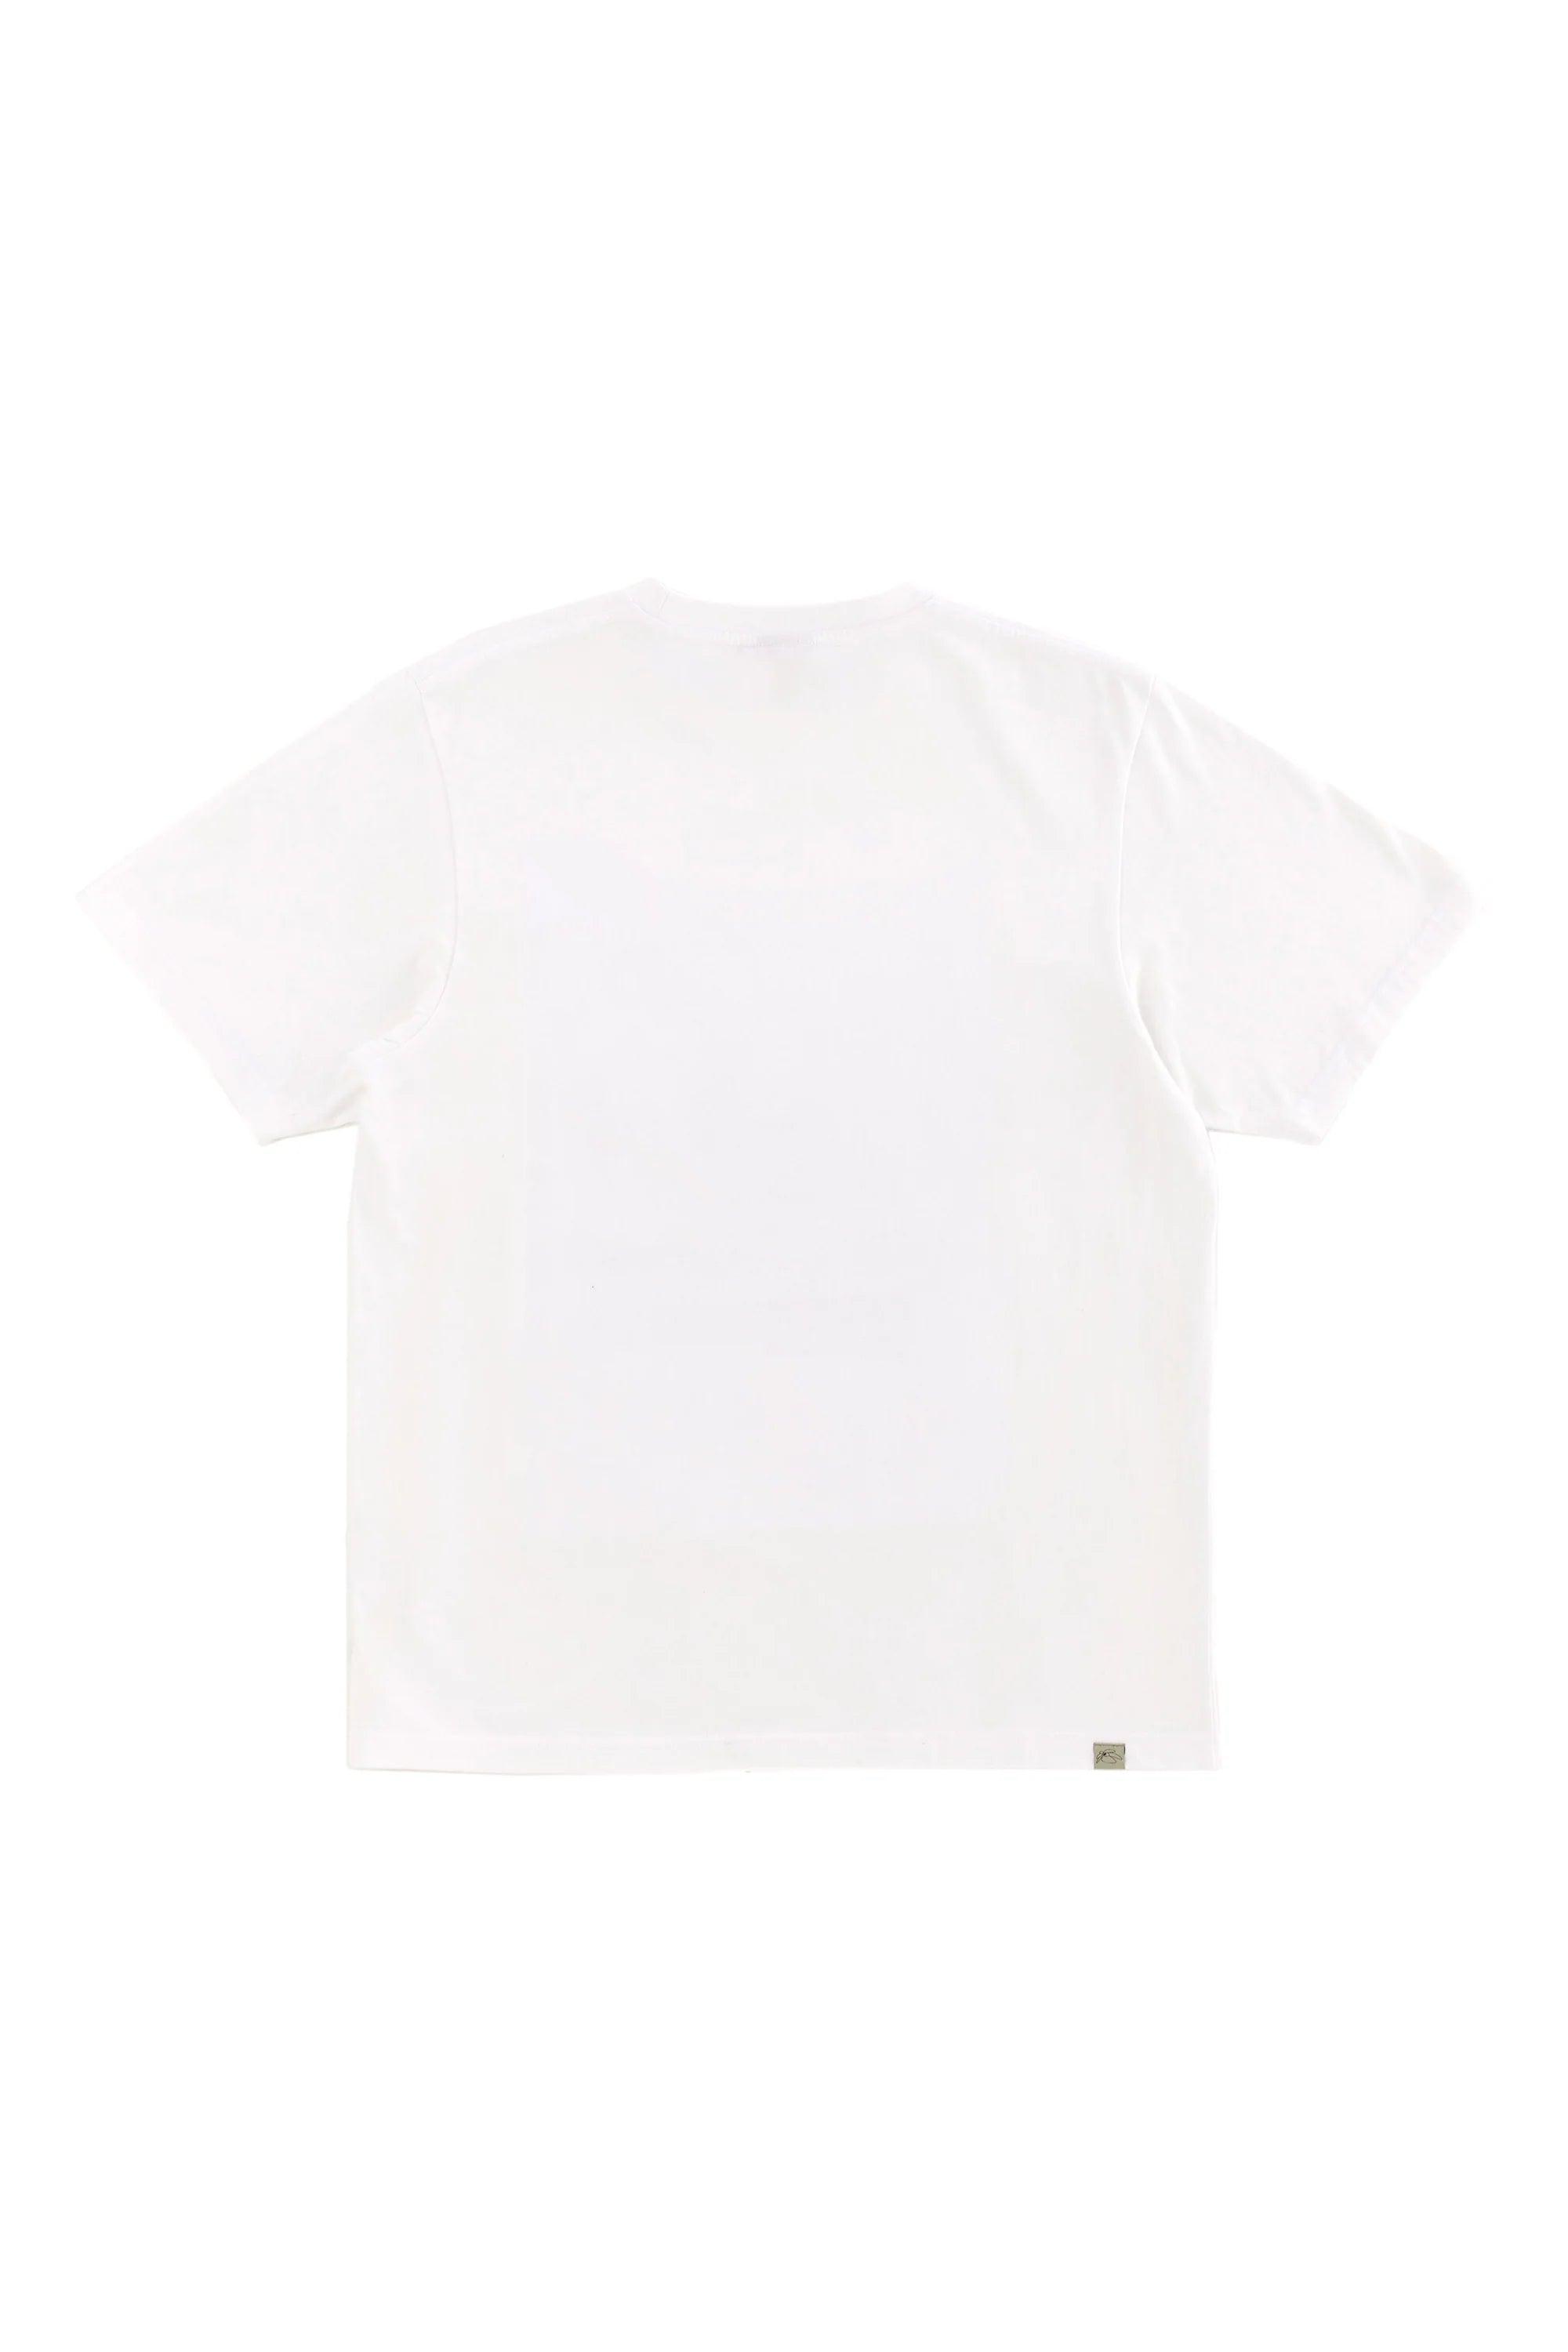 PAM / Perks and Mini - Leap SS Tee - White - T-Shirts